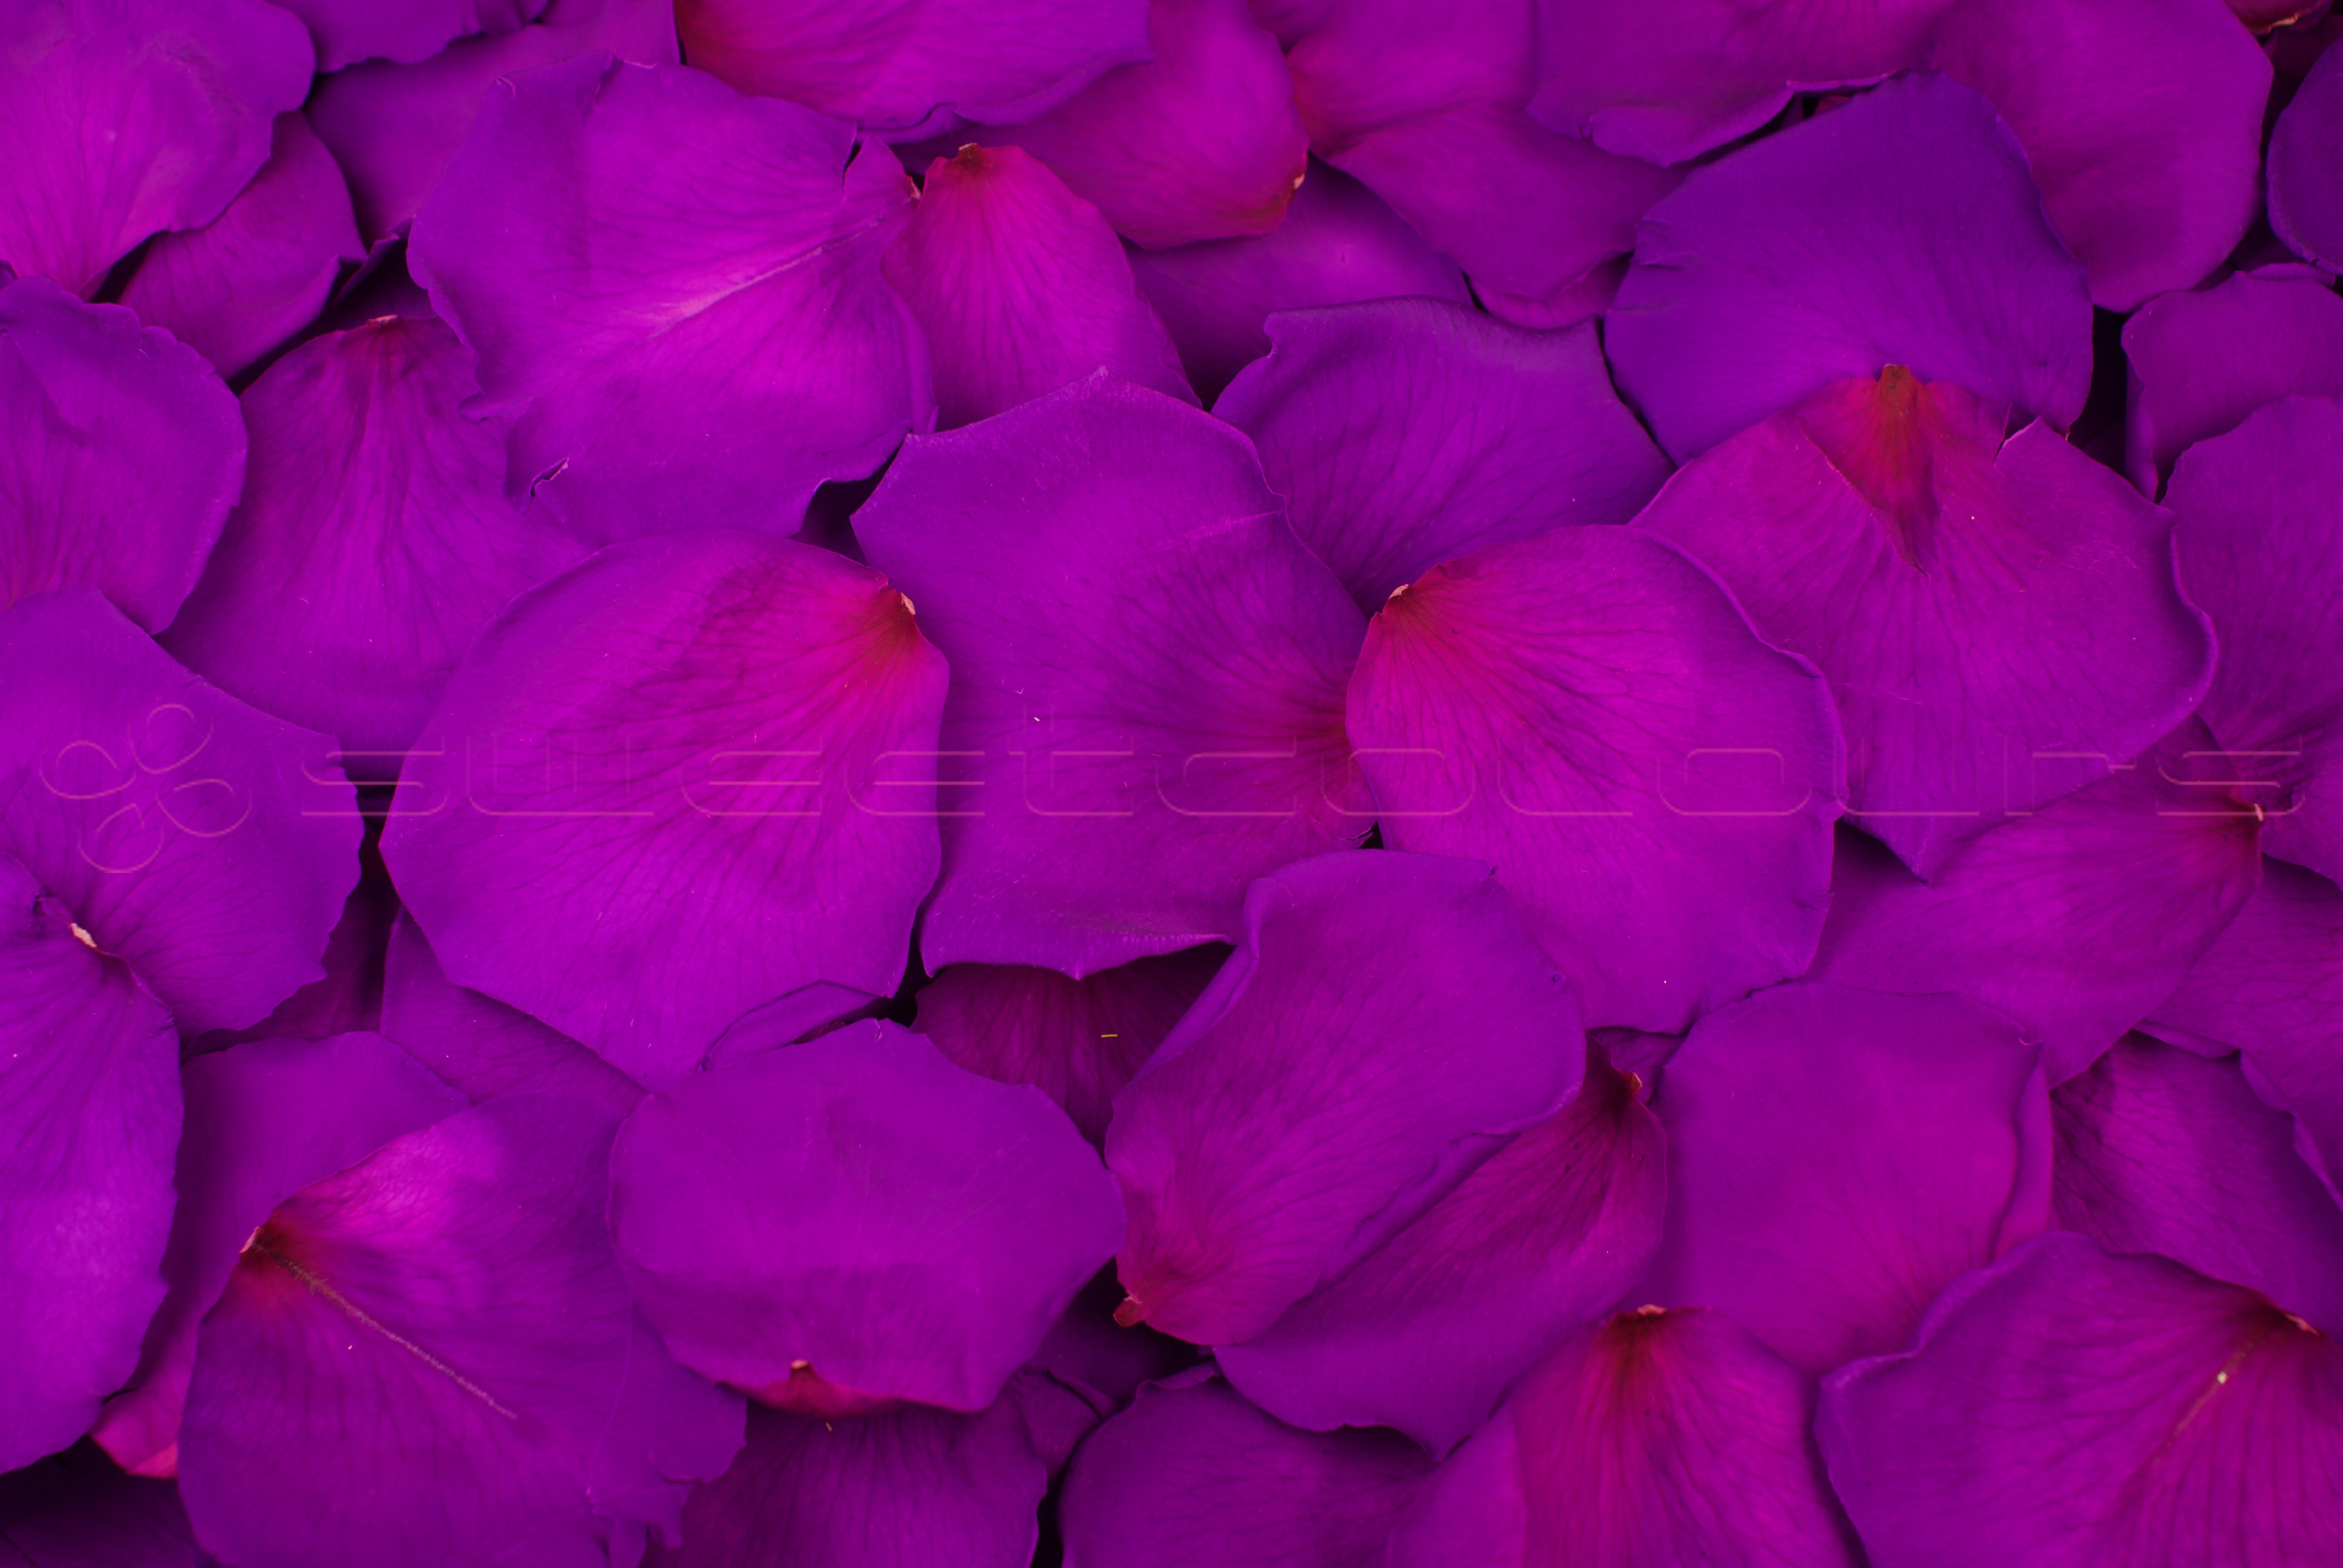 Pétales de roses conservés Violet